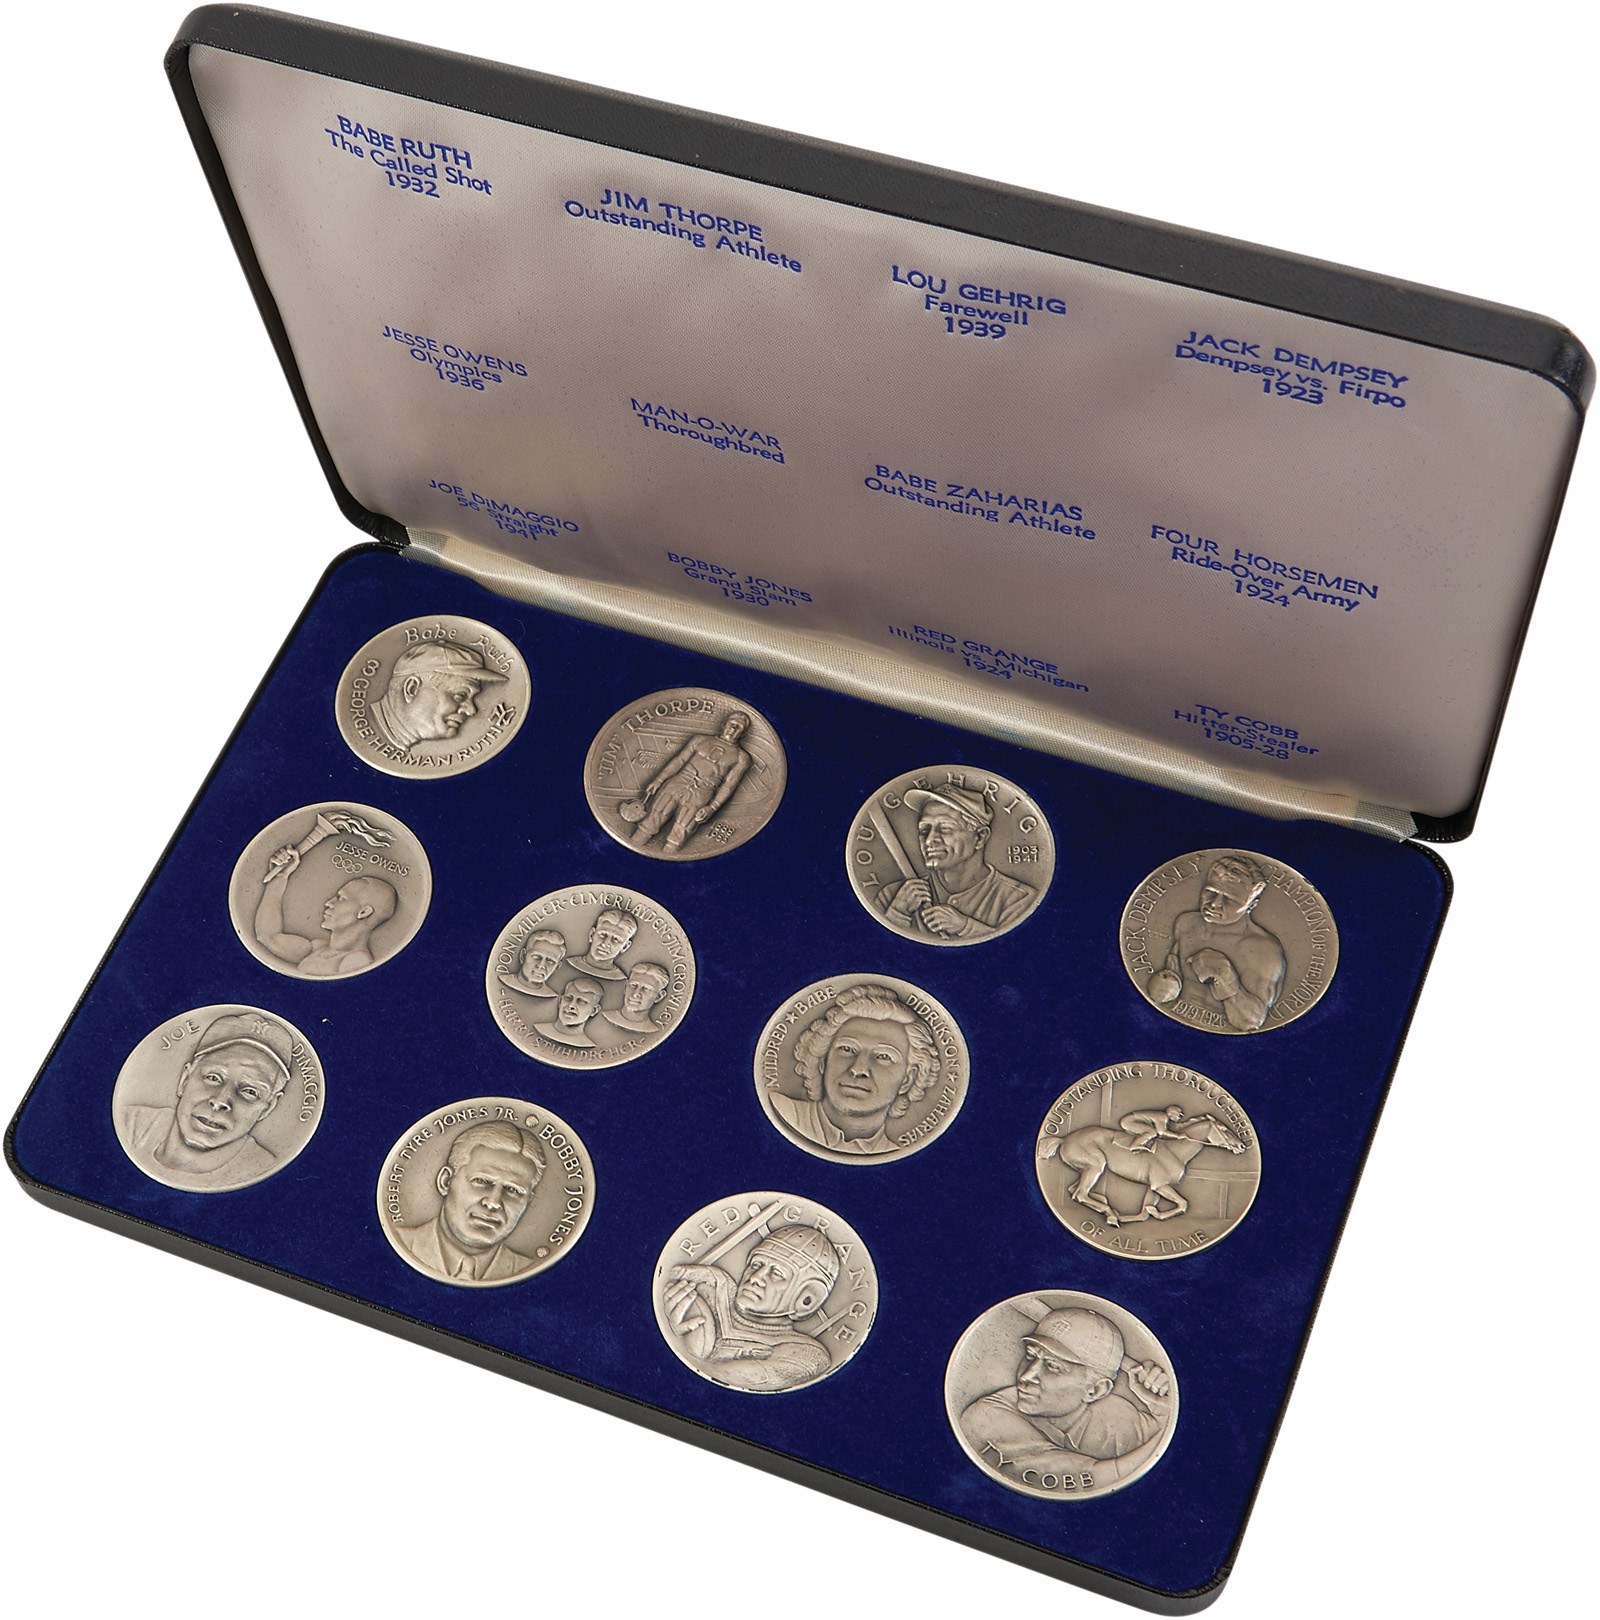 - 1967 Cavalcade of Sports Coin/Medallion in Original Box